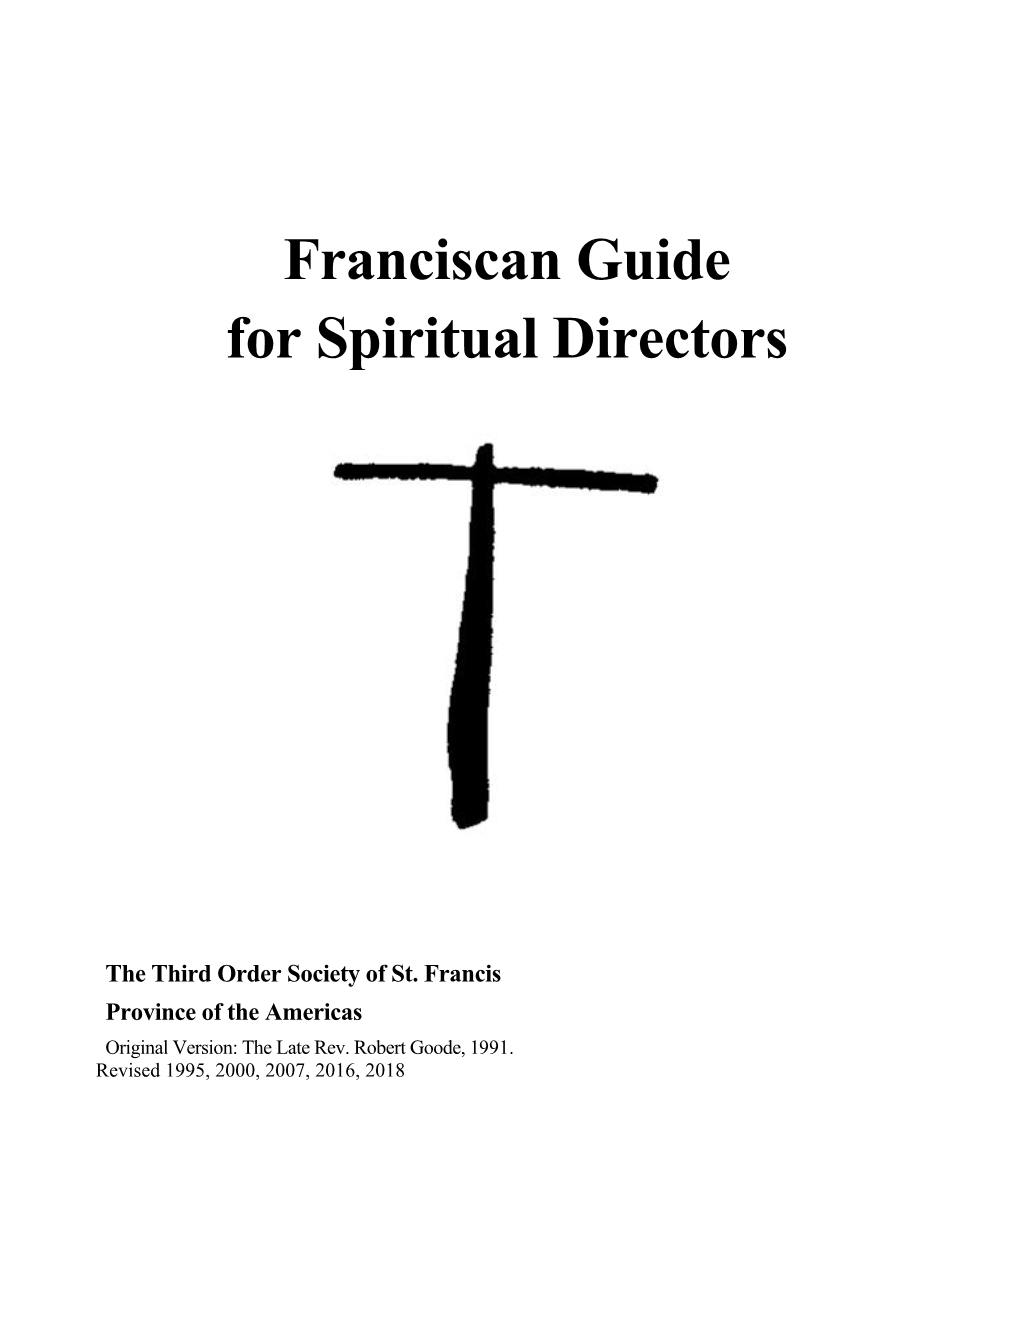 Franciscan Guide for Spiritual Directors